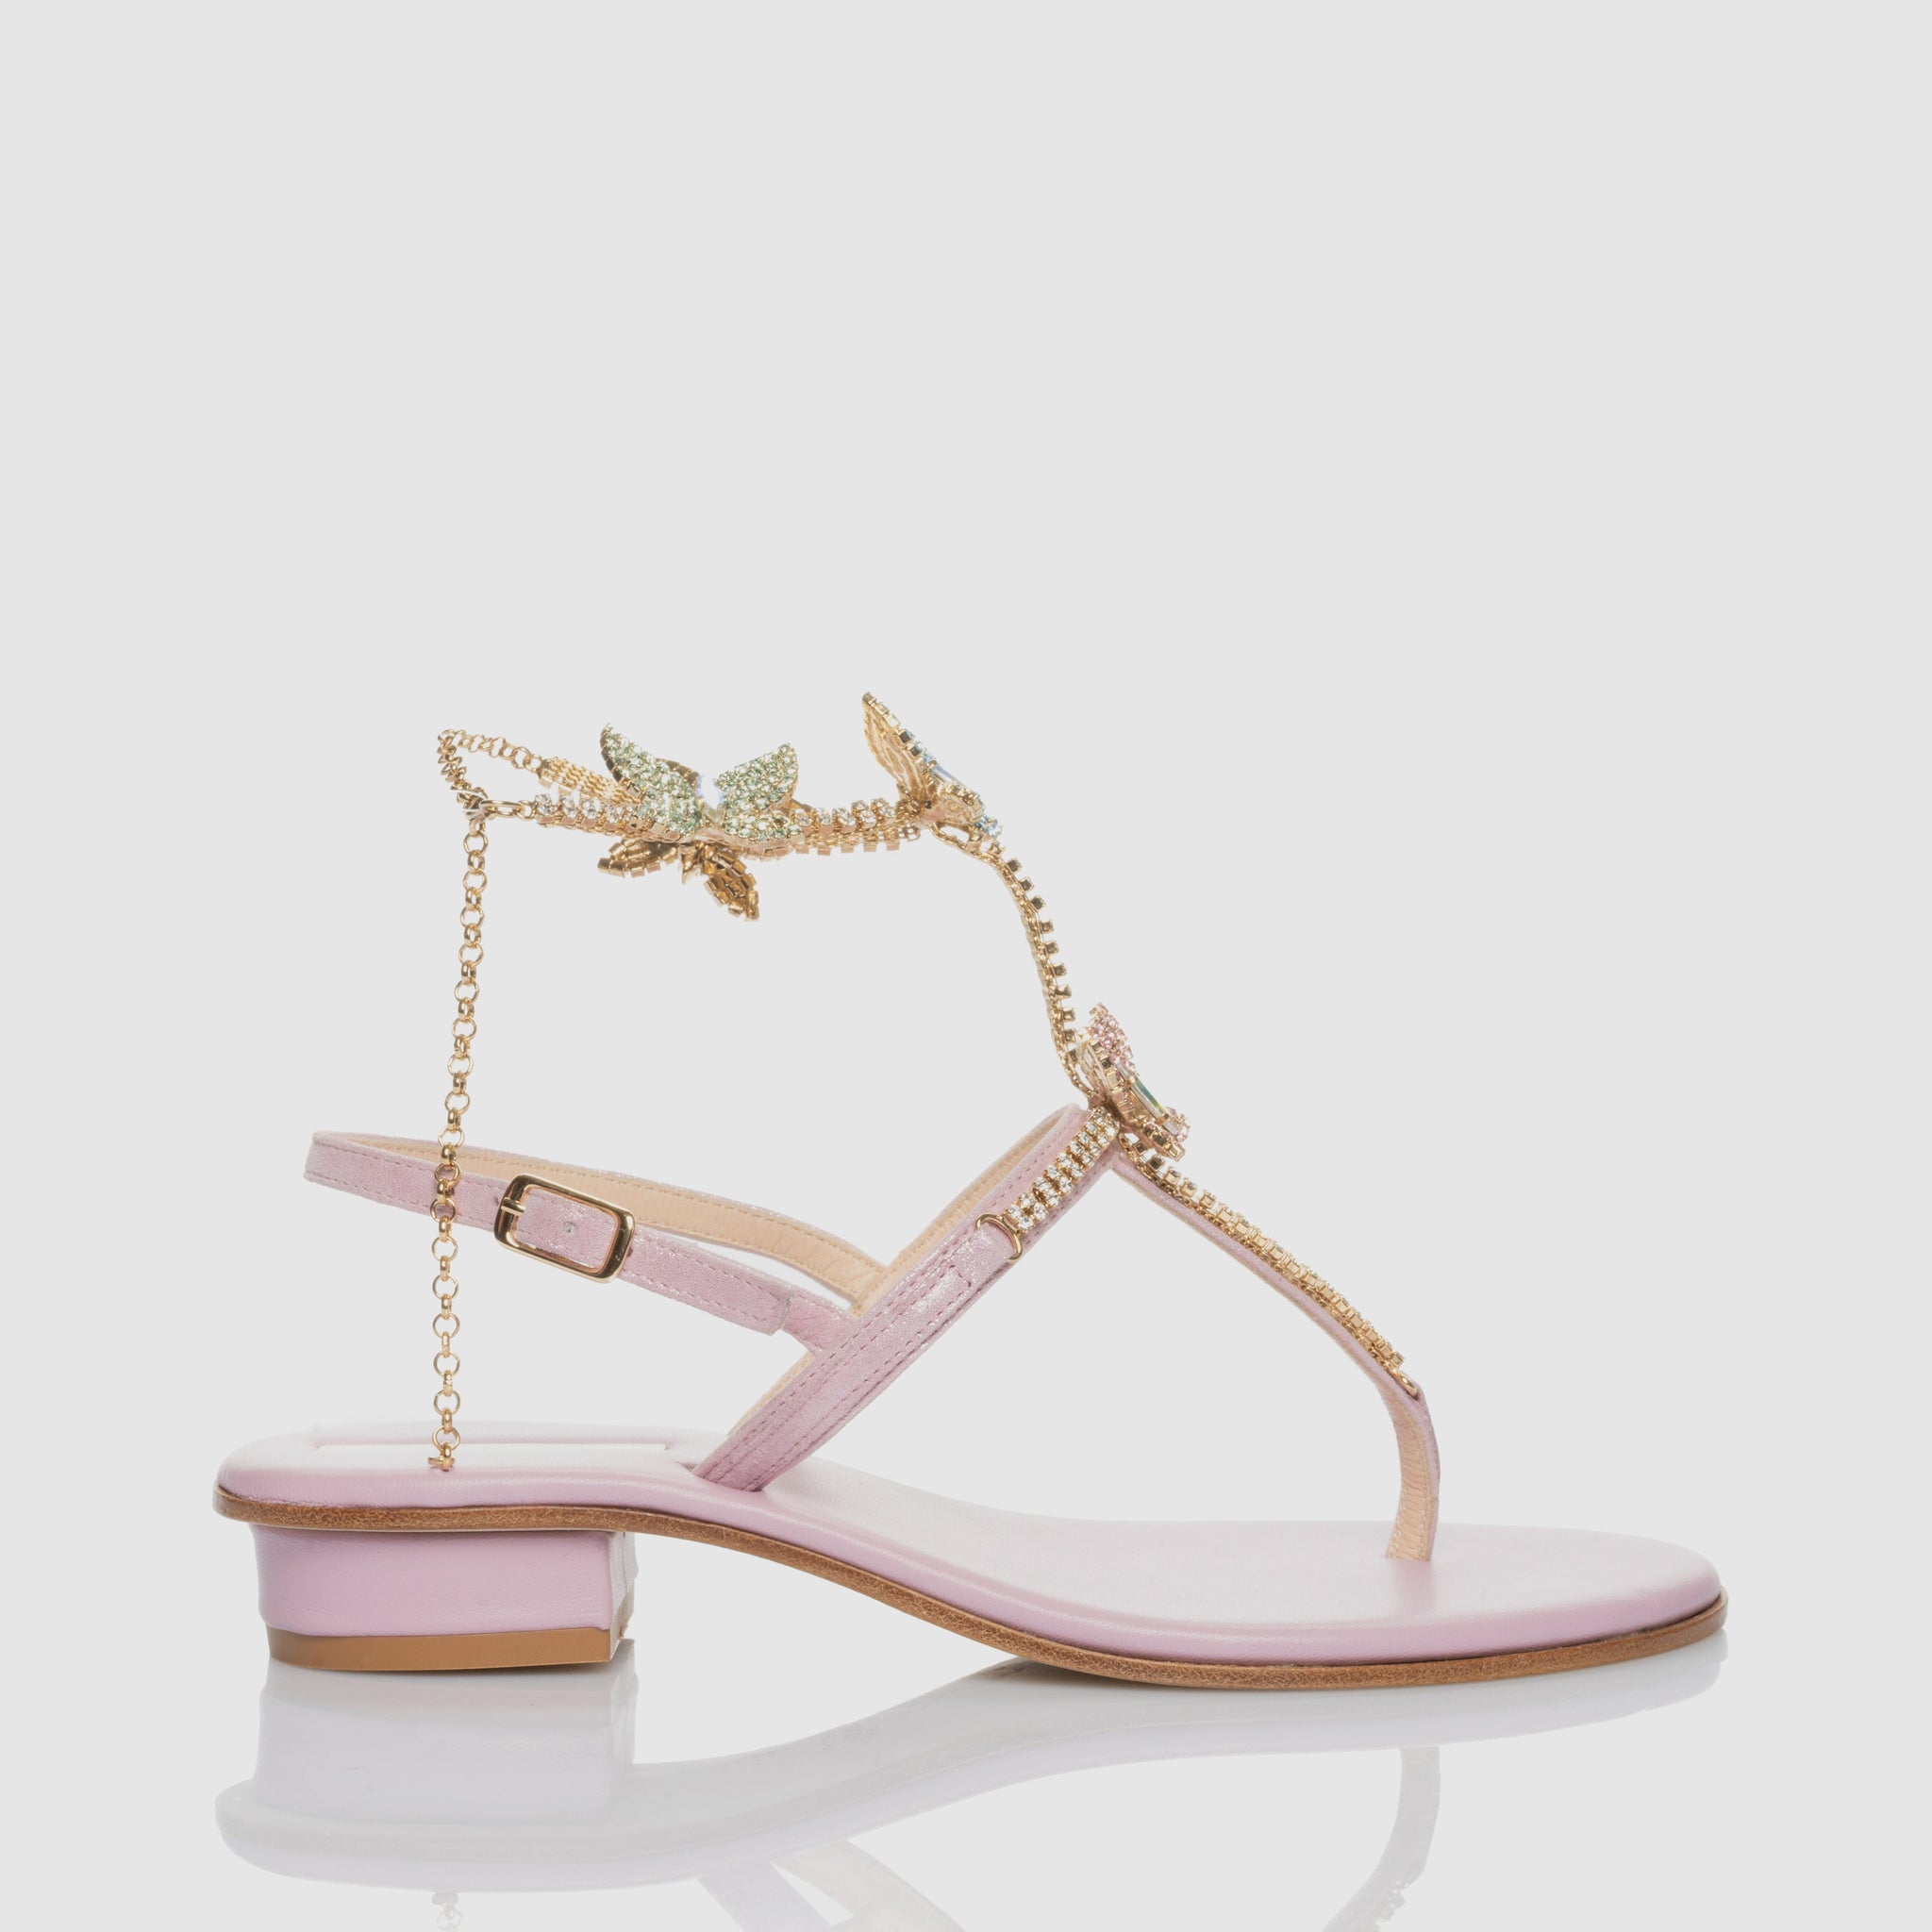 Sandalo con Tacco Butterfly Pink in Nappa con cristalli tema farfalle